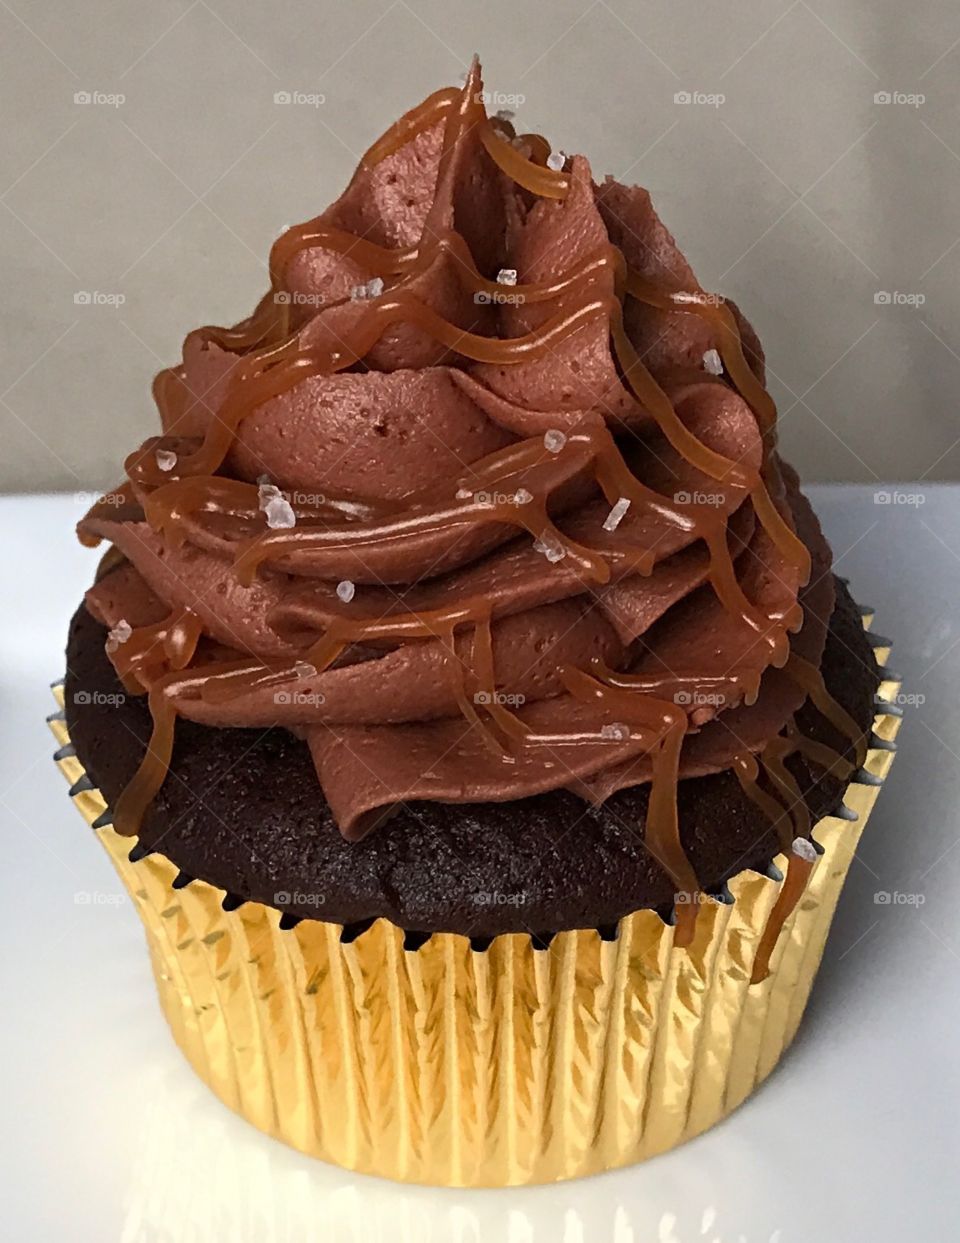 Chocolate salted caramel cupcake